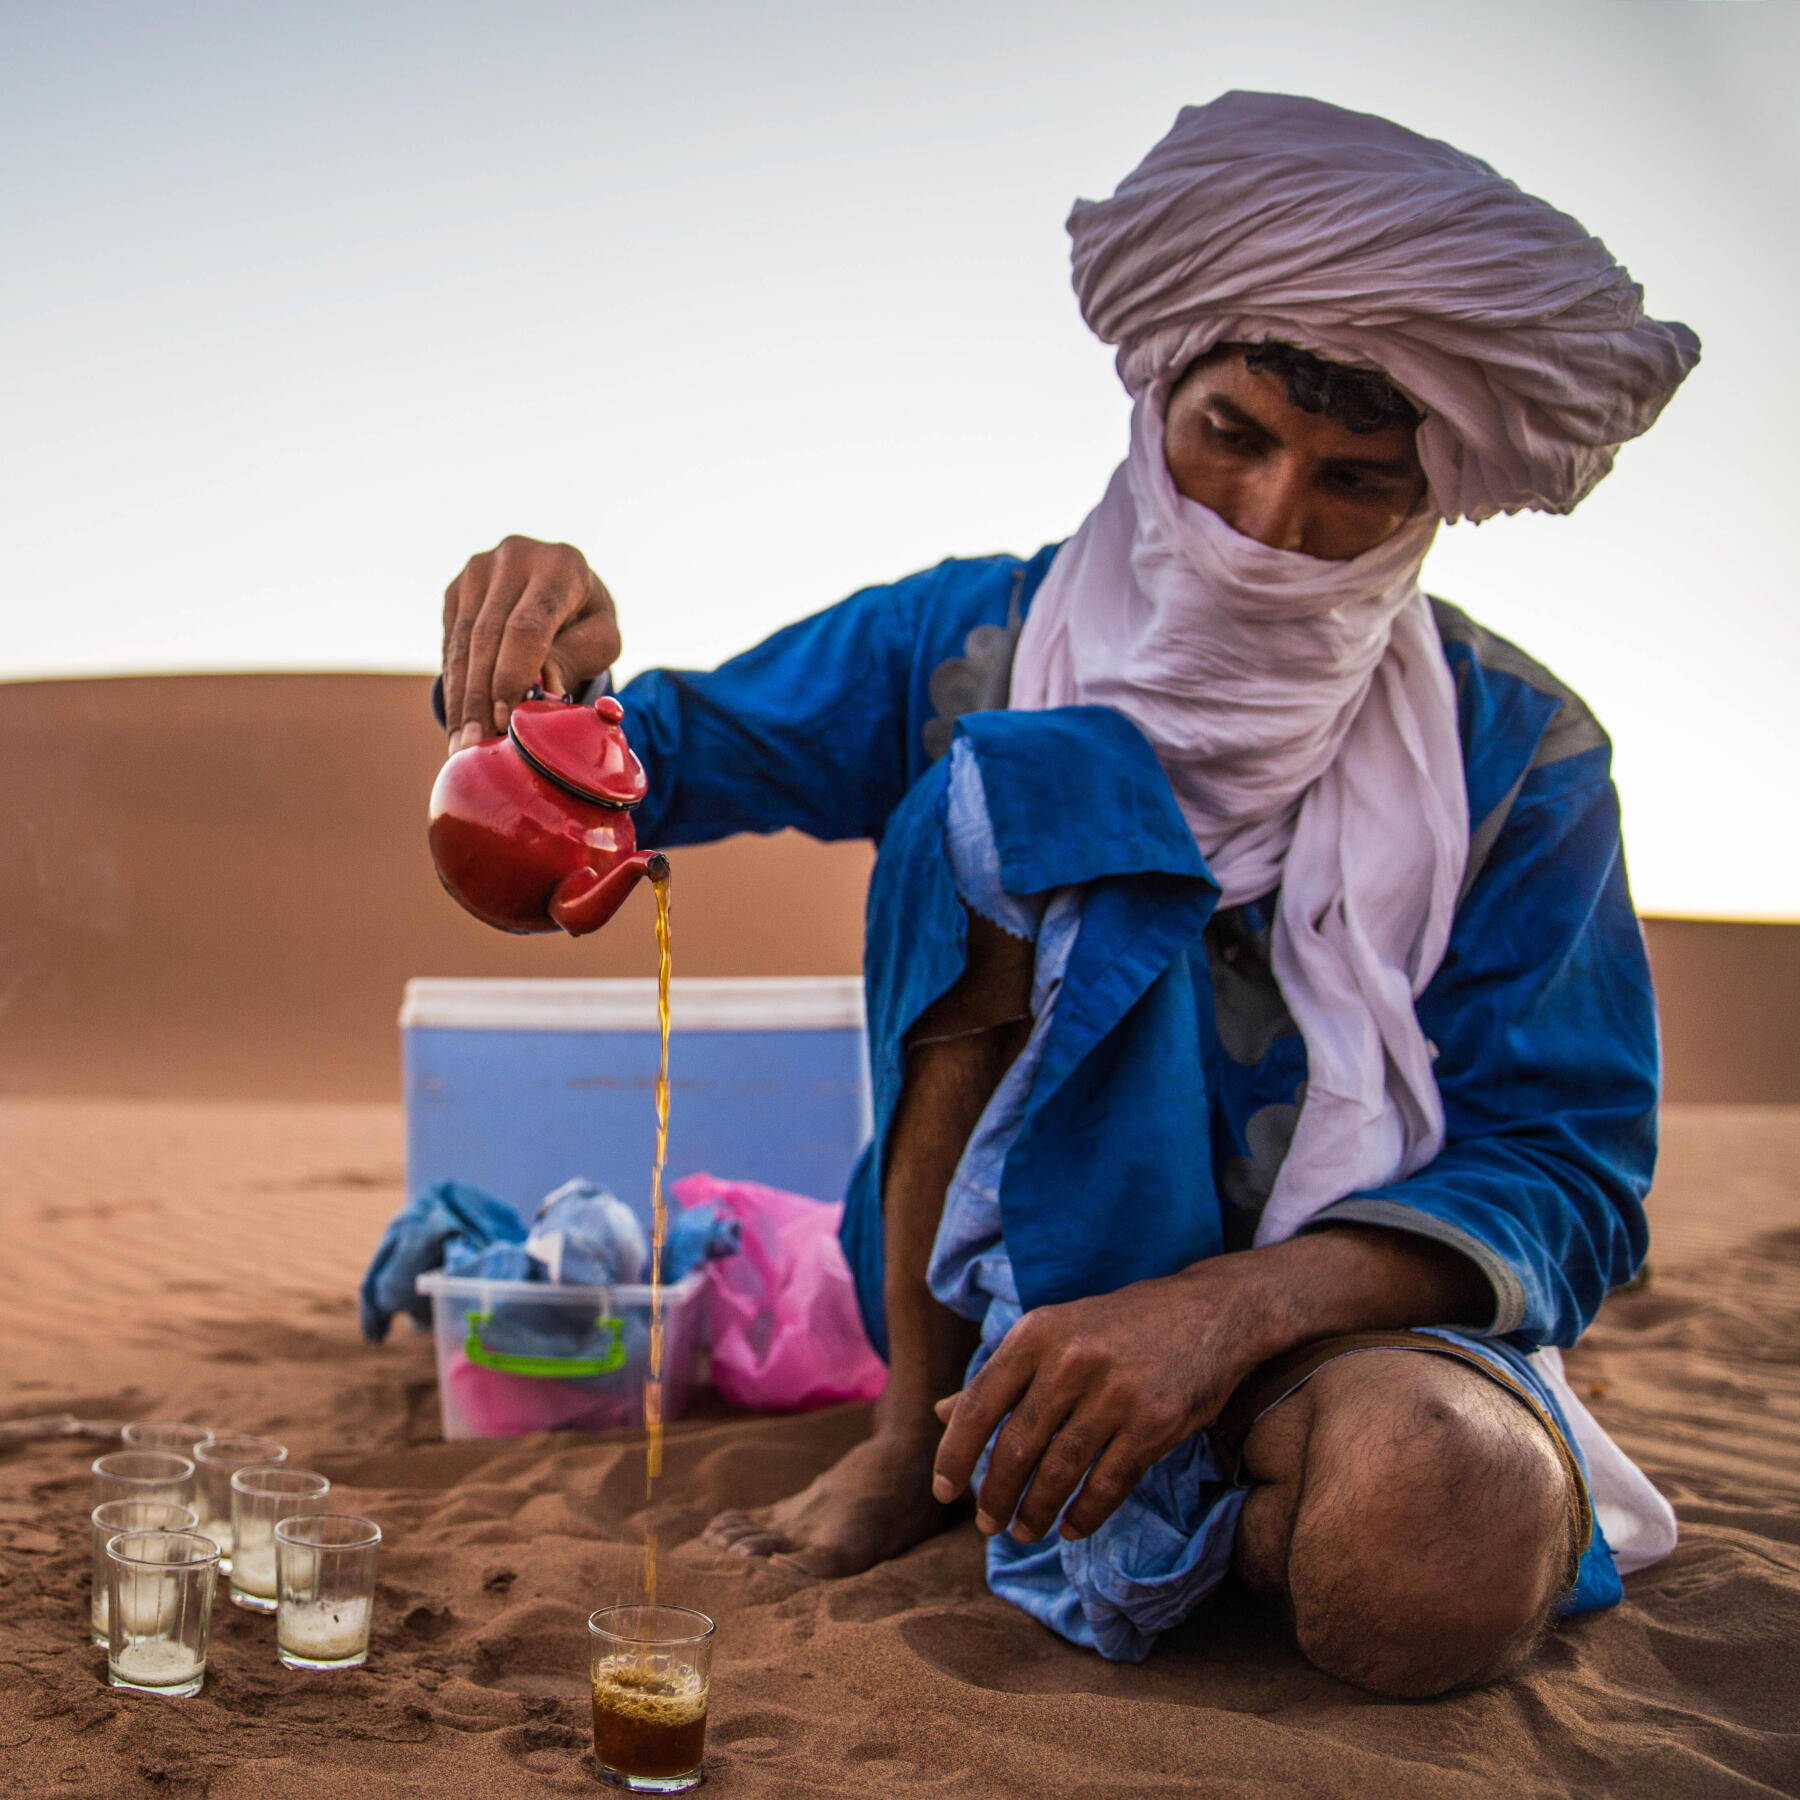 Bedouin from the Sahara serving tea